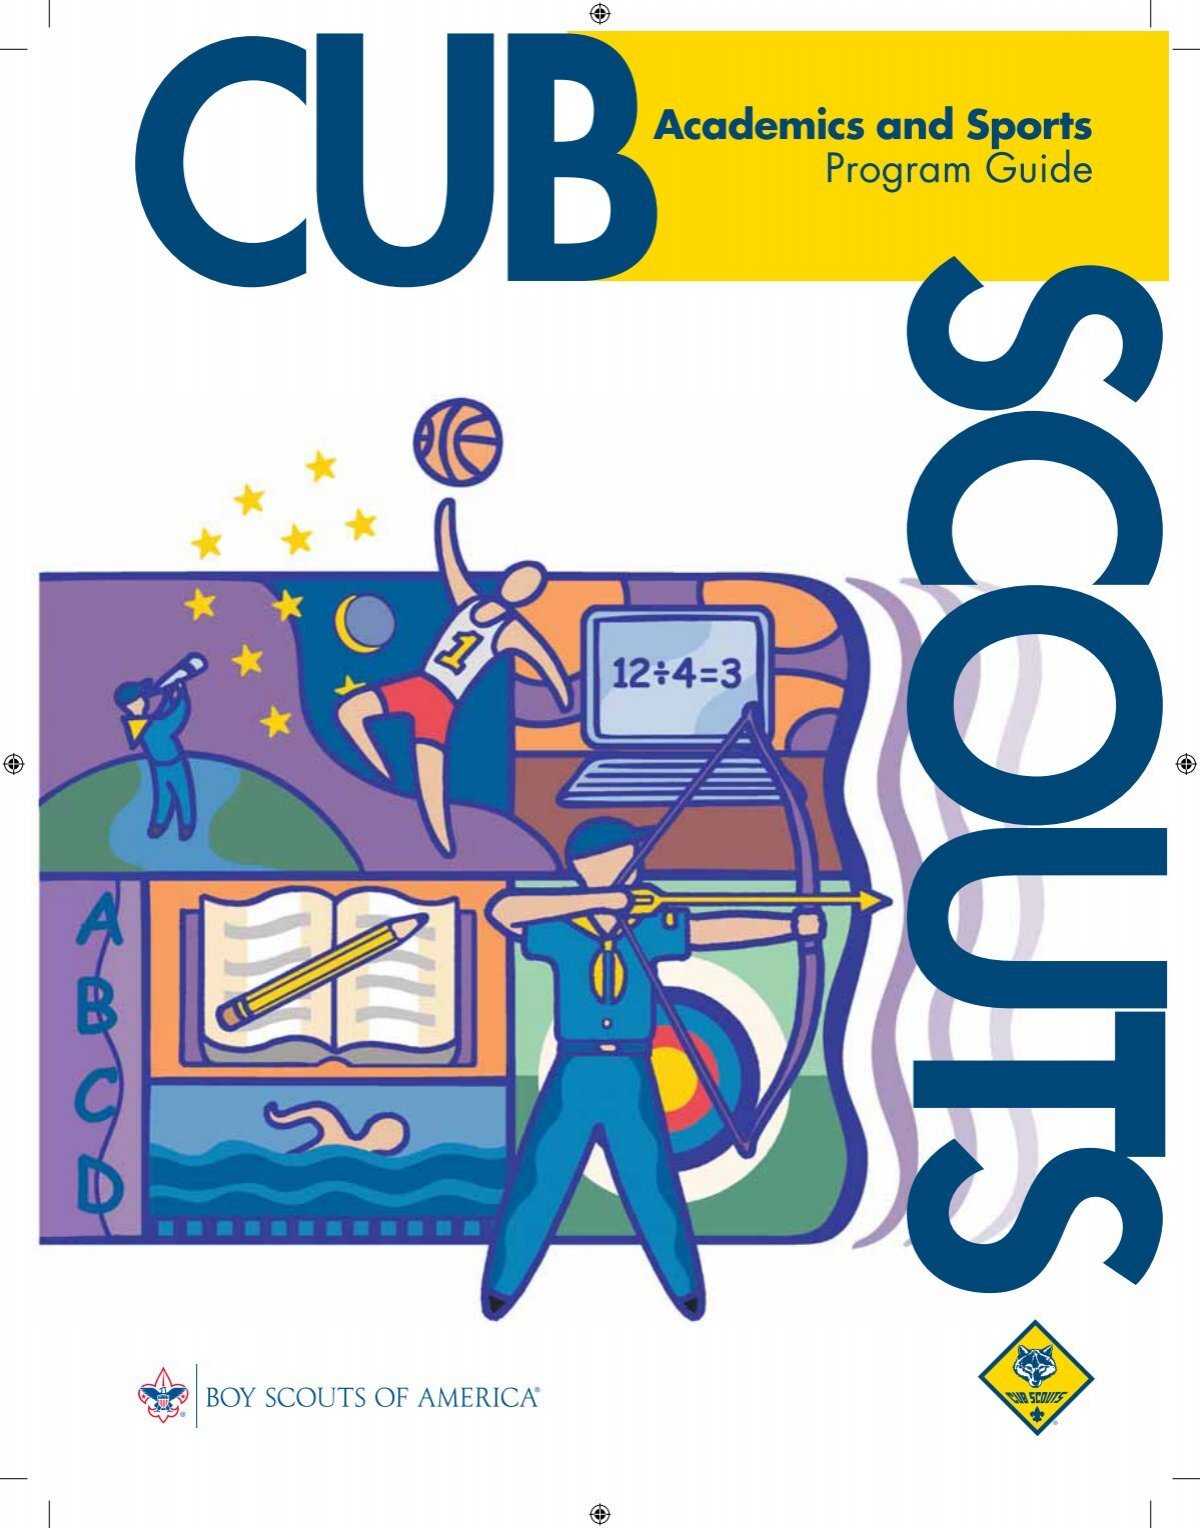 Cub Academics and Sports Program Guide